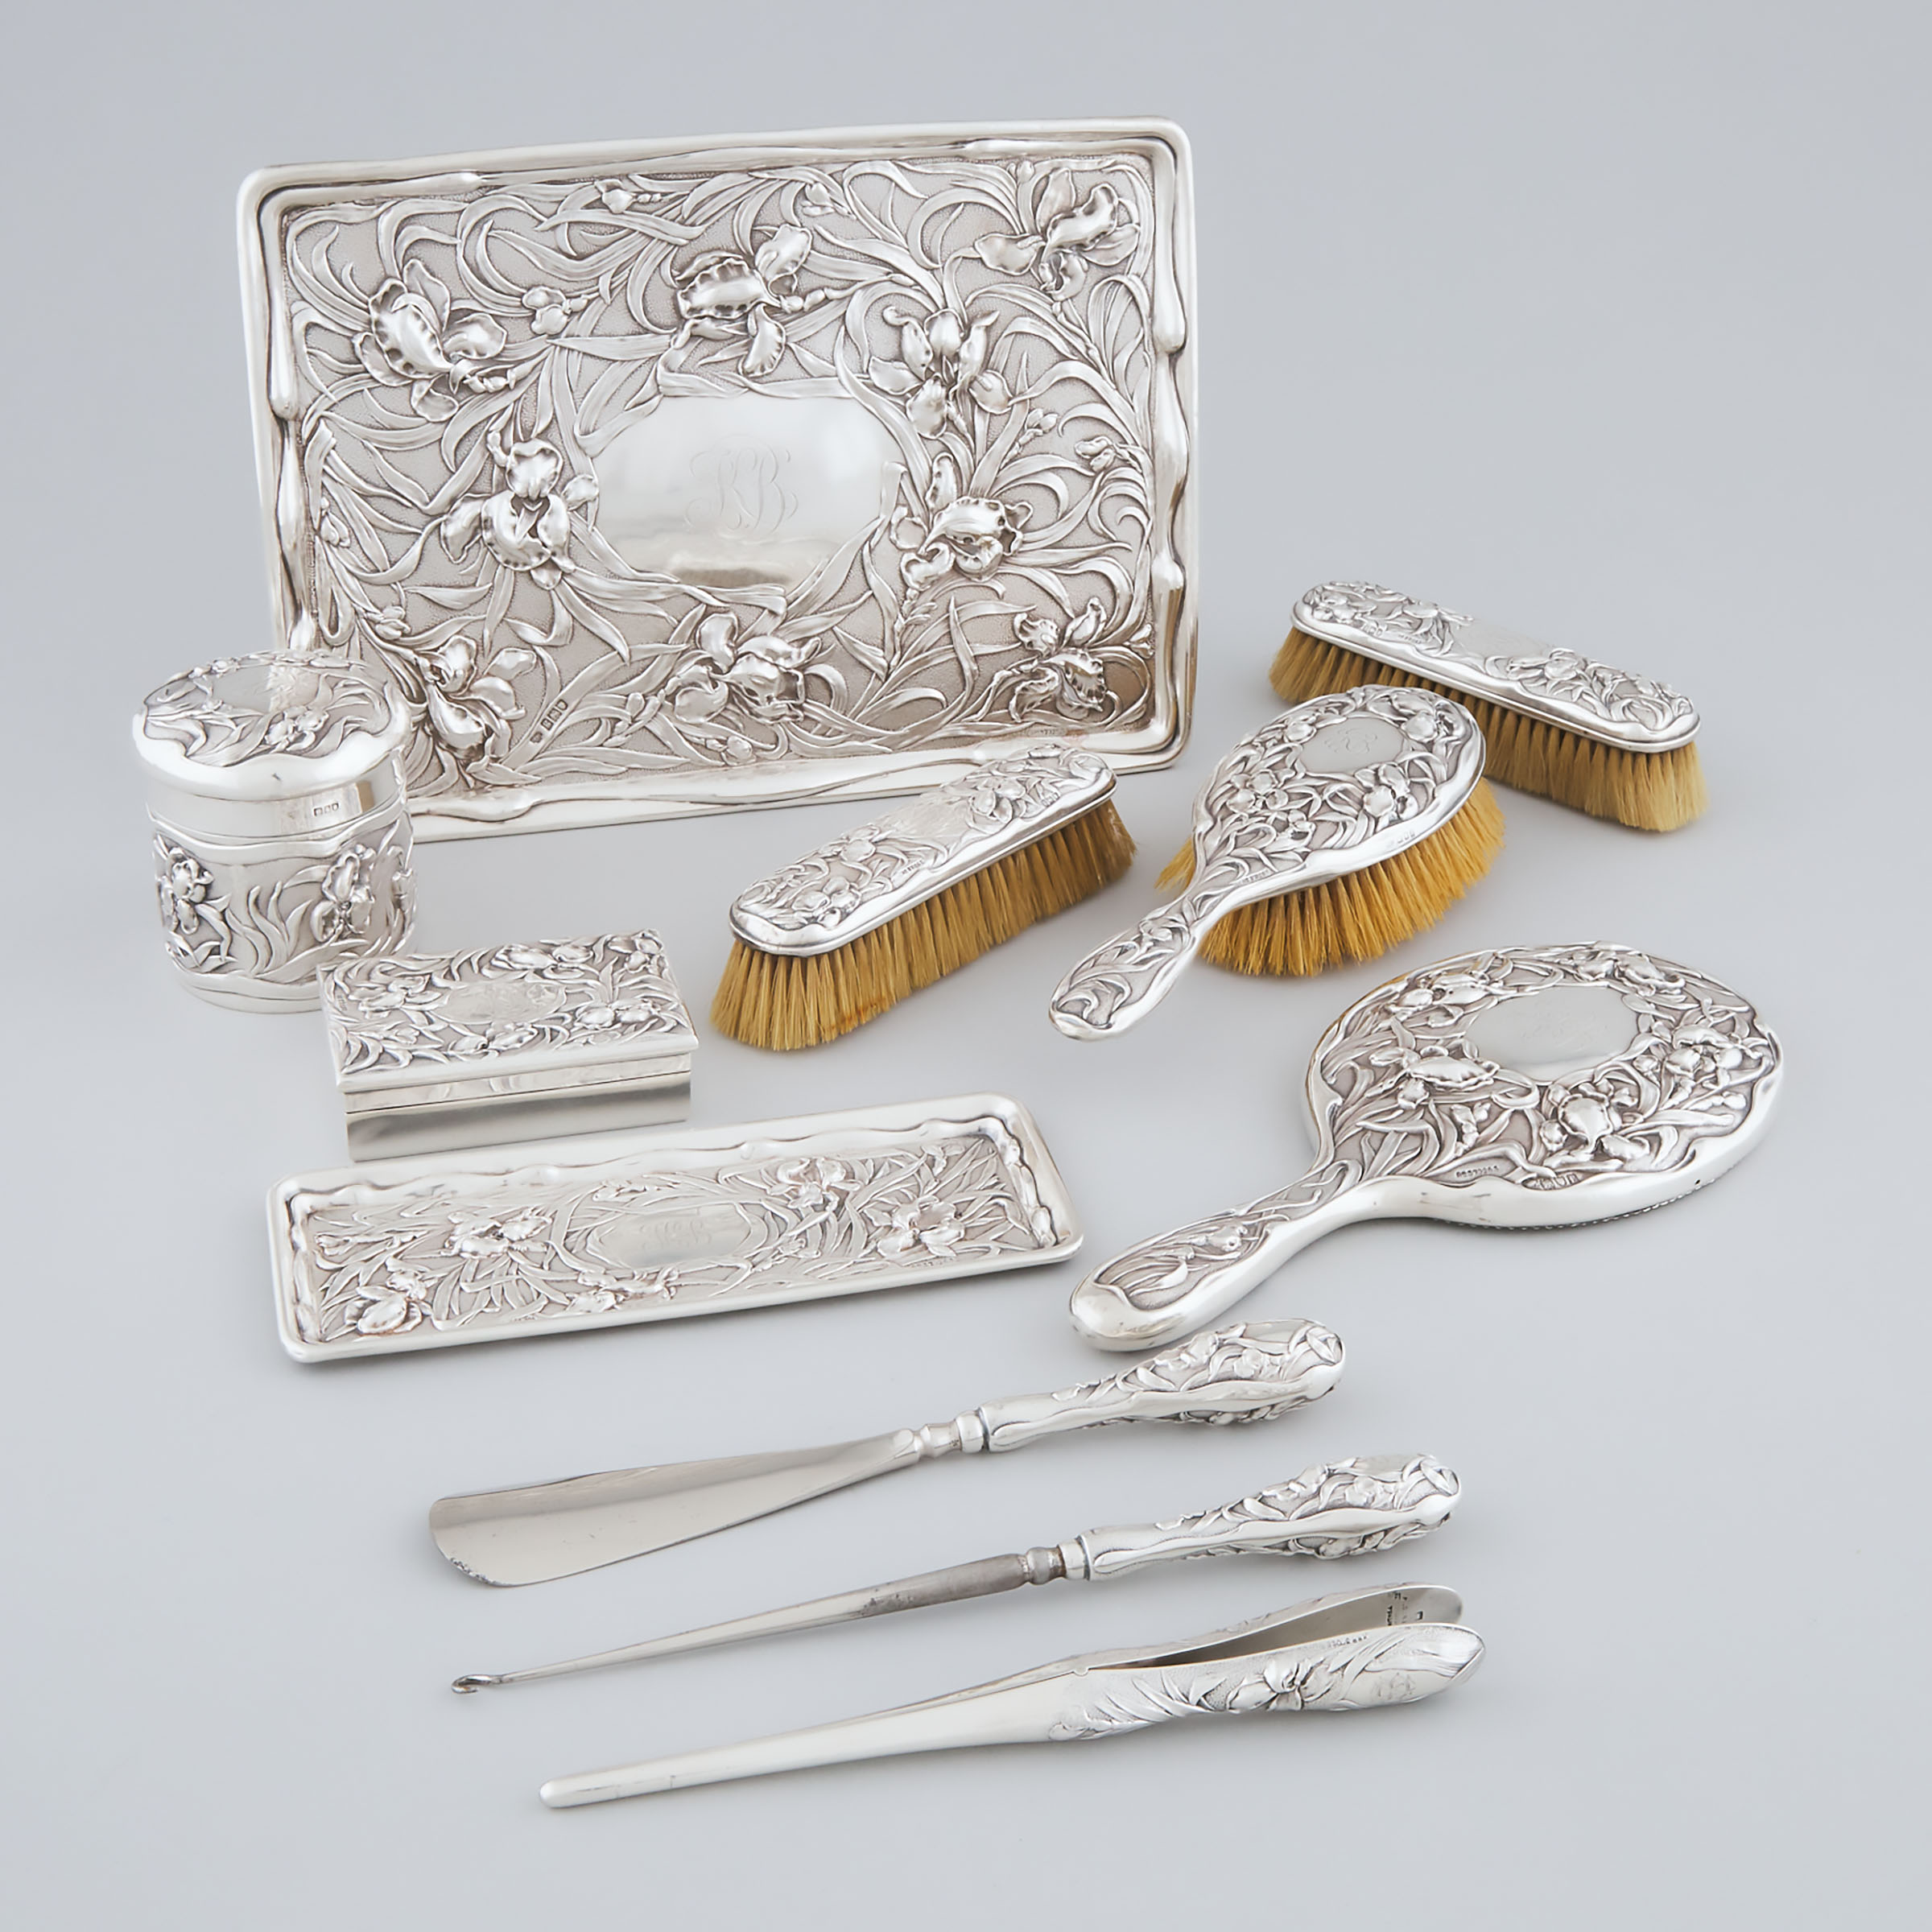 Edwardian Art Nouveau Silver Dressing Table Set, Goldsmiths & Silversmiths Co., London, 1901-16